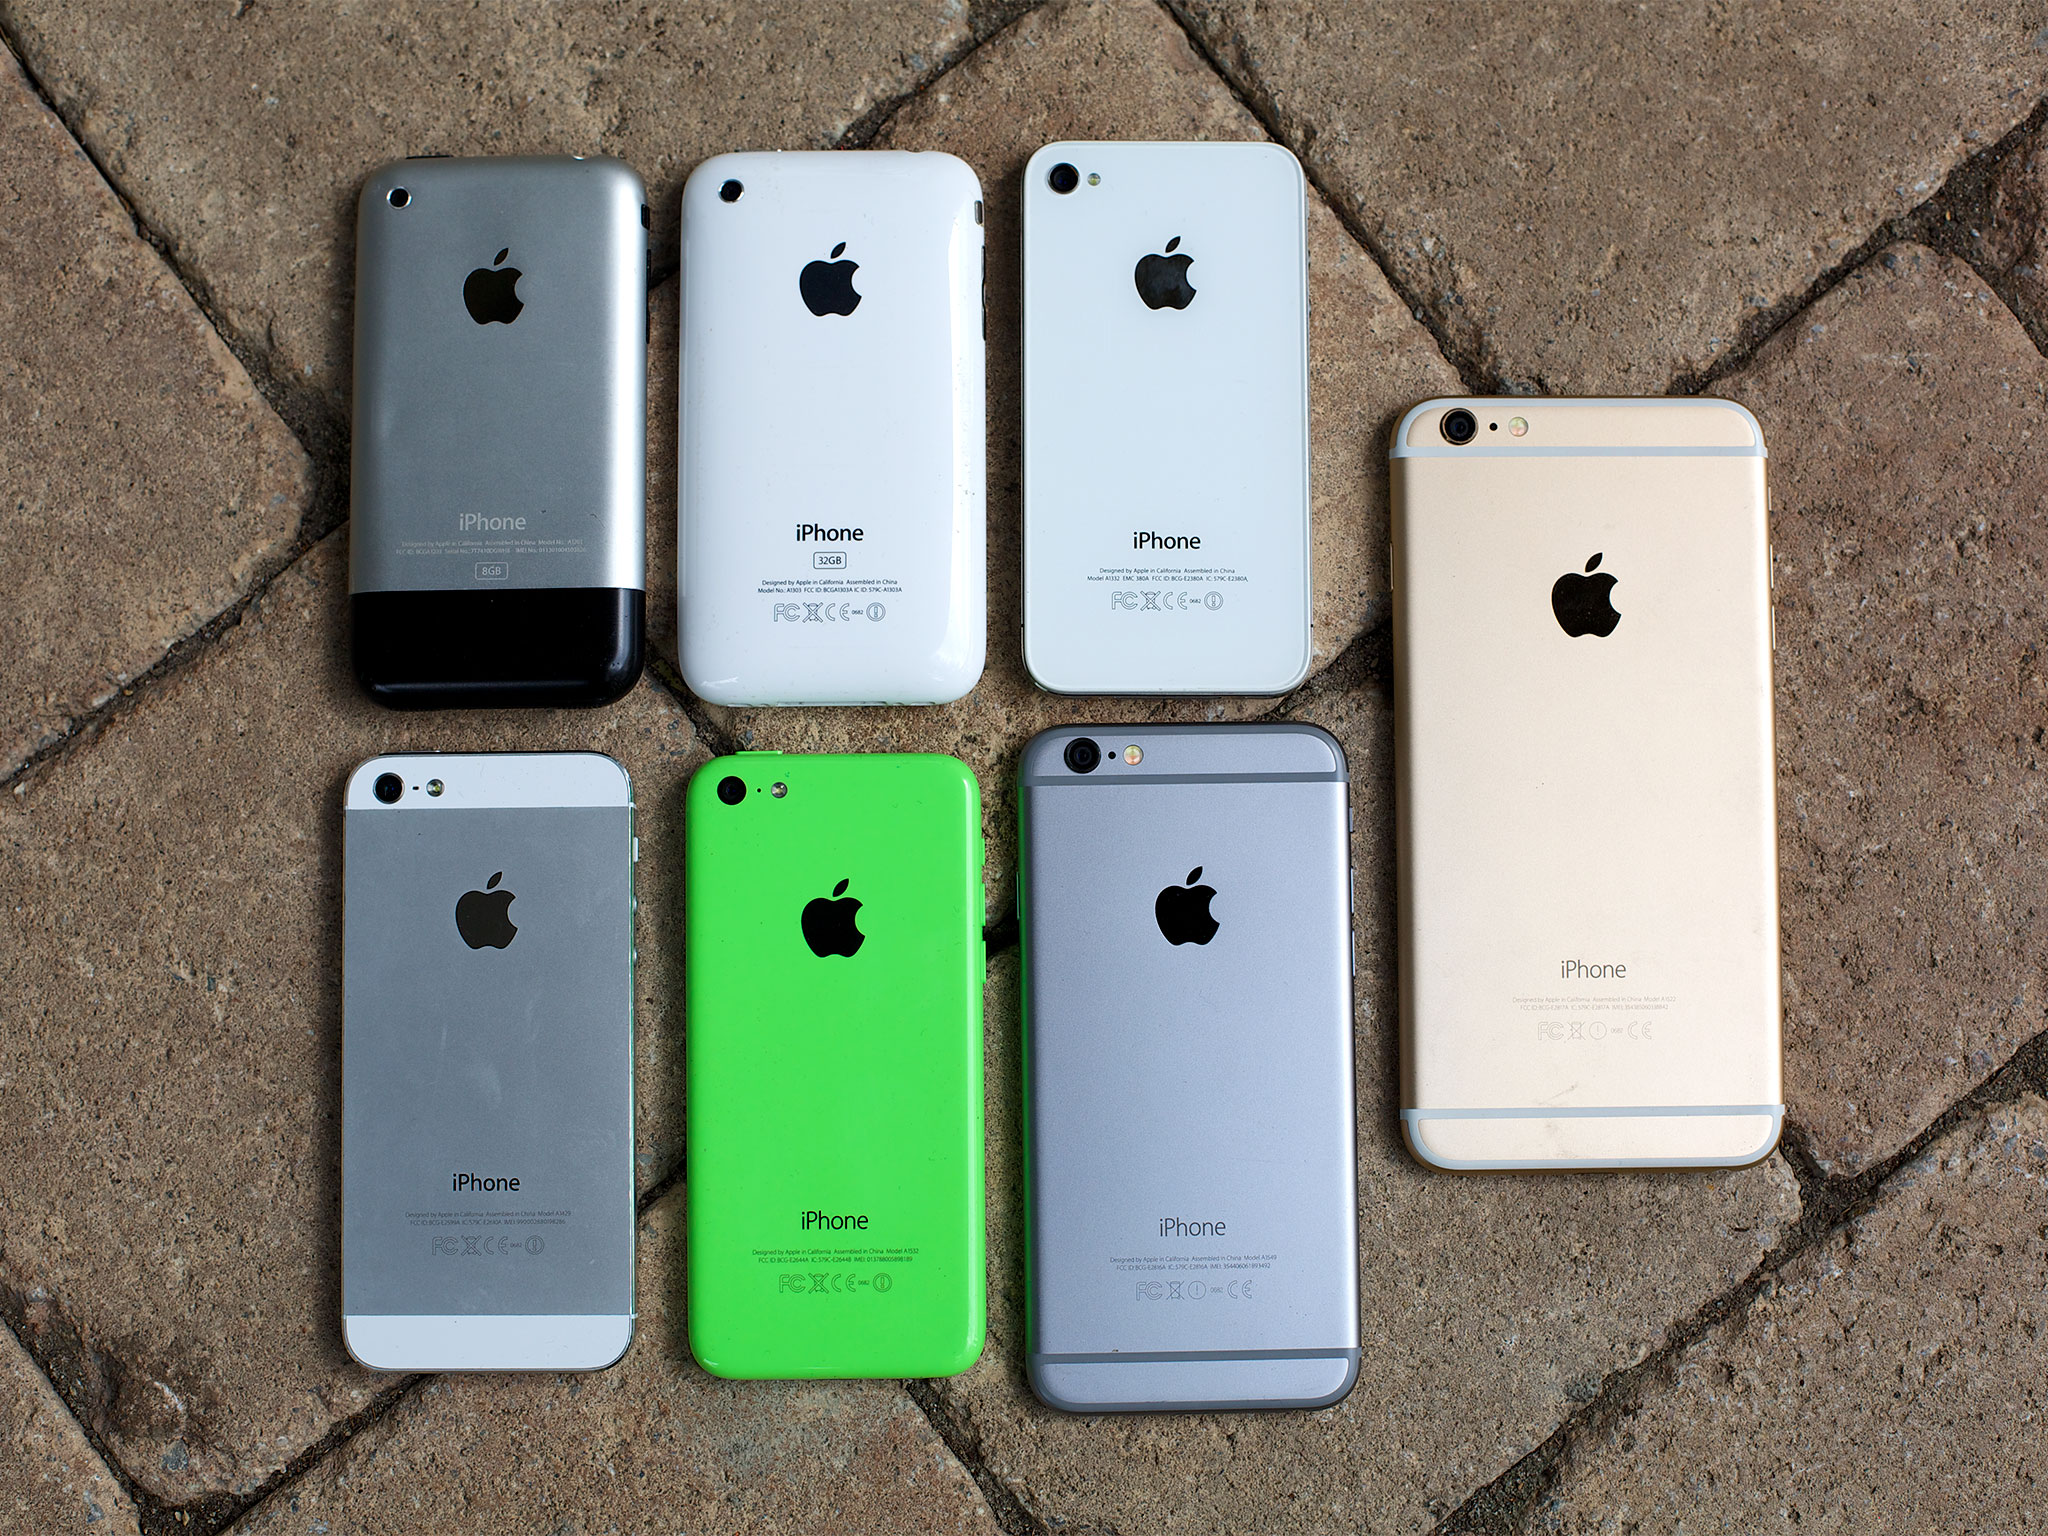 Apple announces one billion iPhones sold